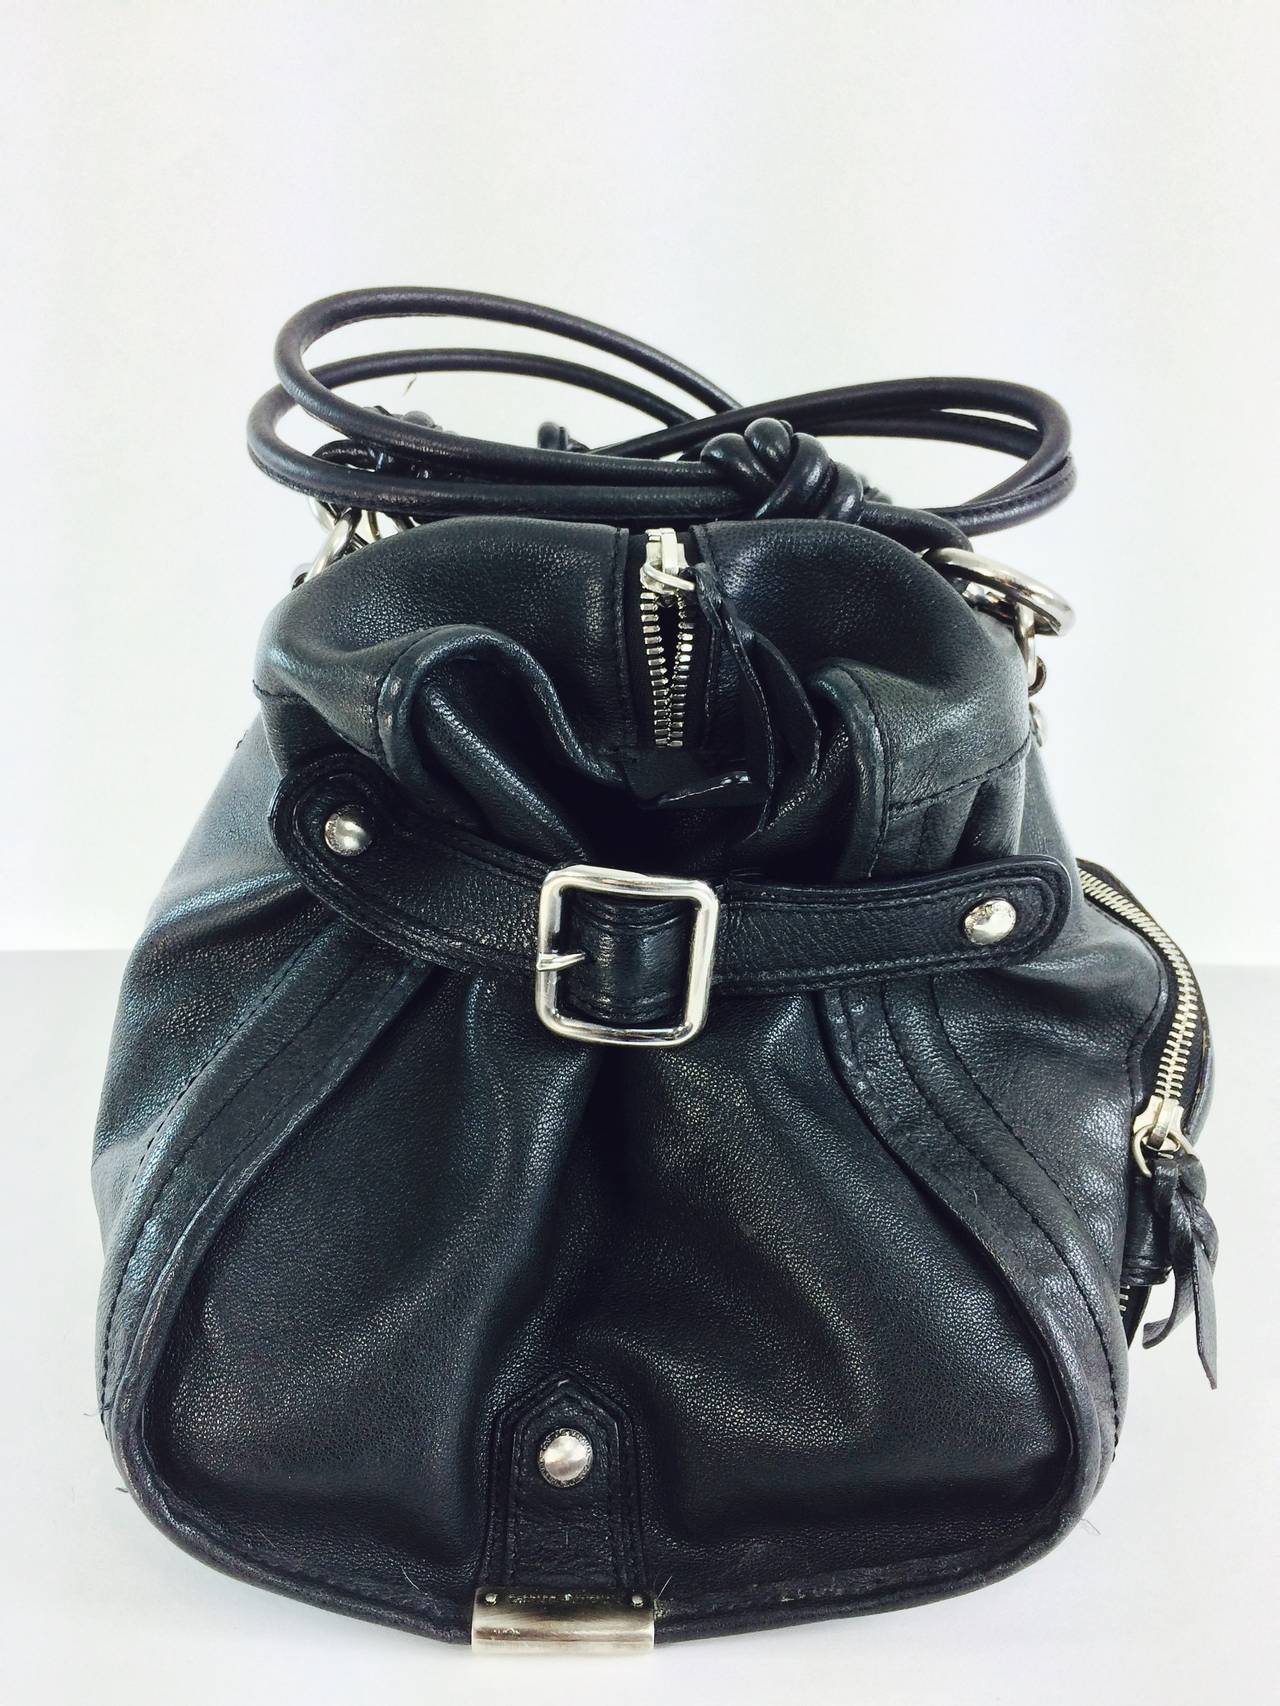 Costume National black leather double handle satchel handbag For Sale at 1stdibs